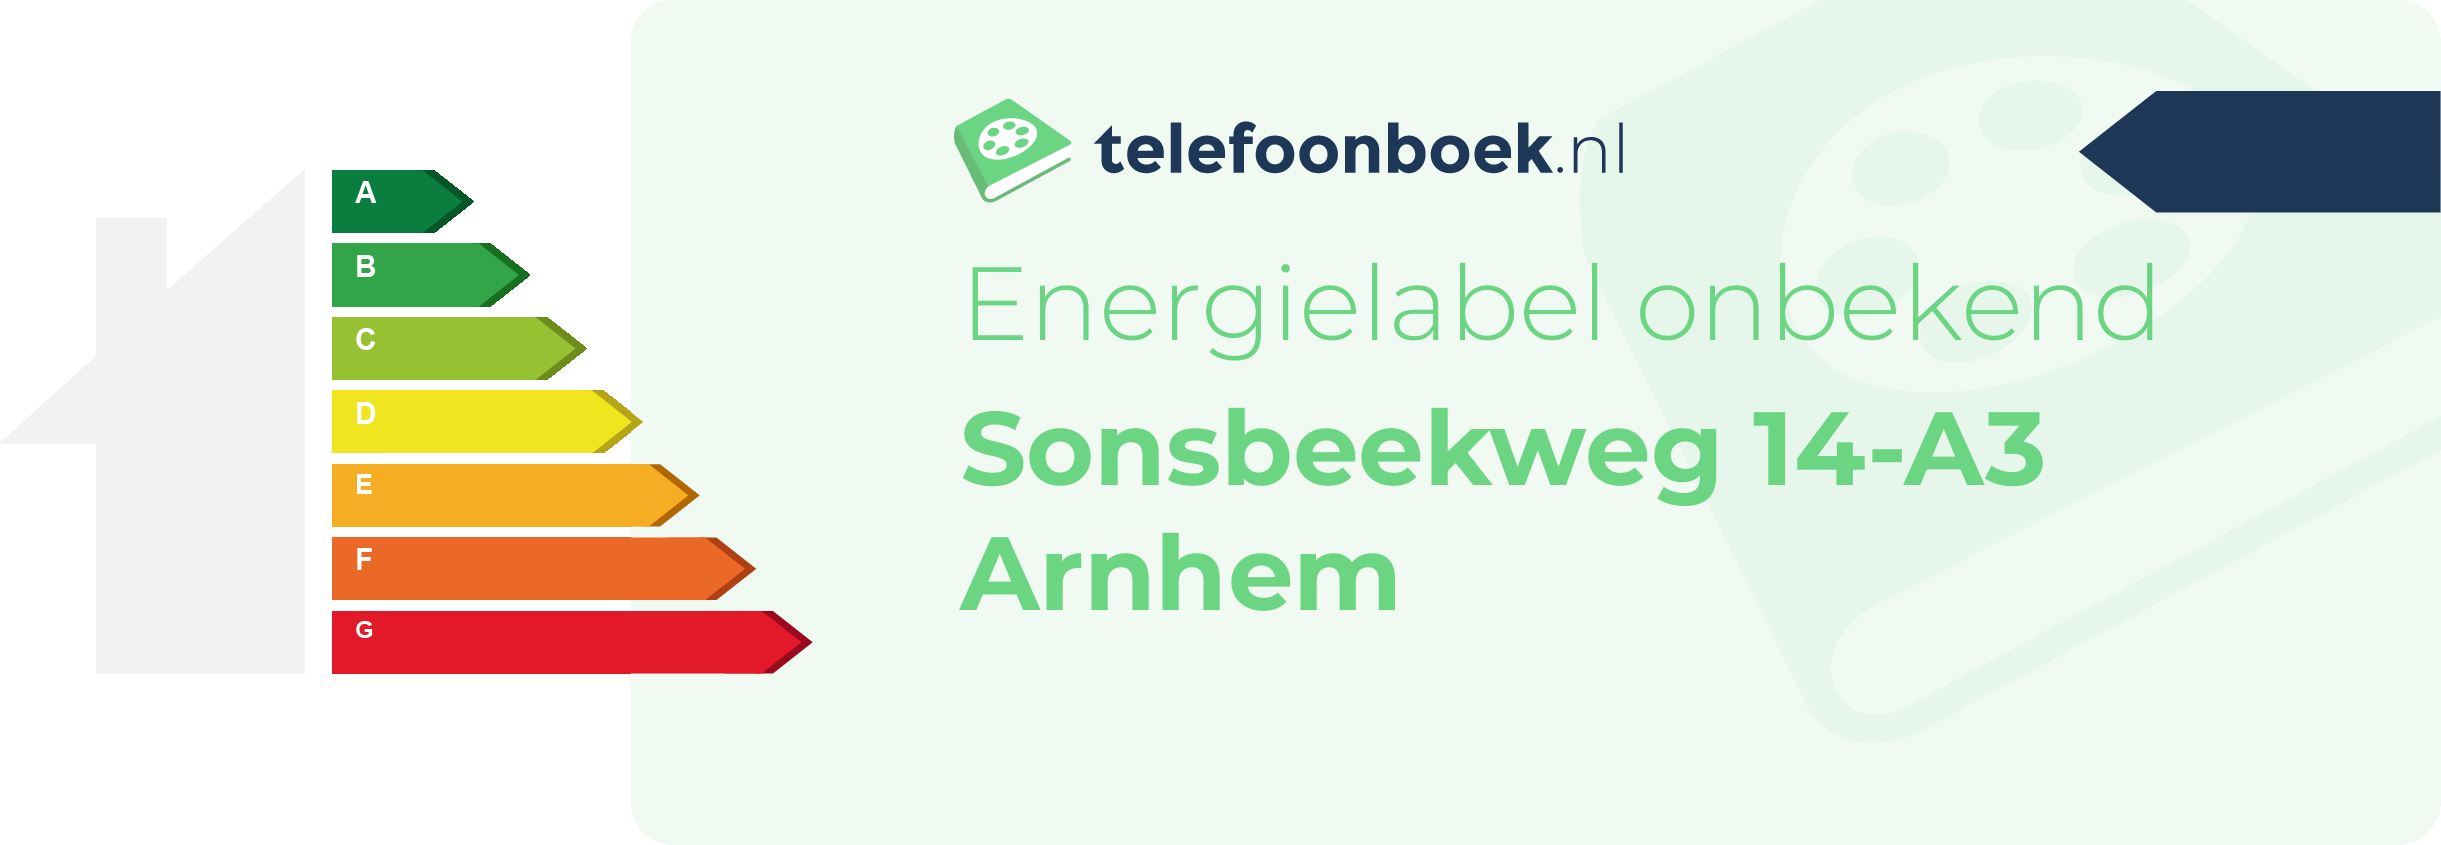 Energielabel Sonsbeekweg 14-A3 Arnhem